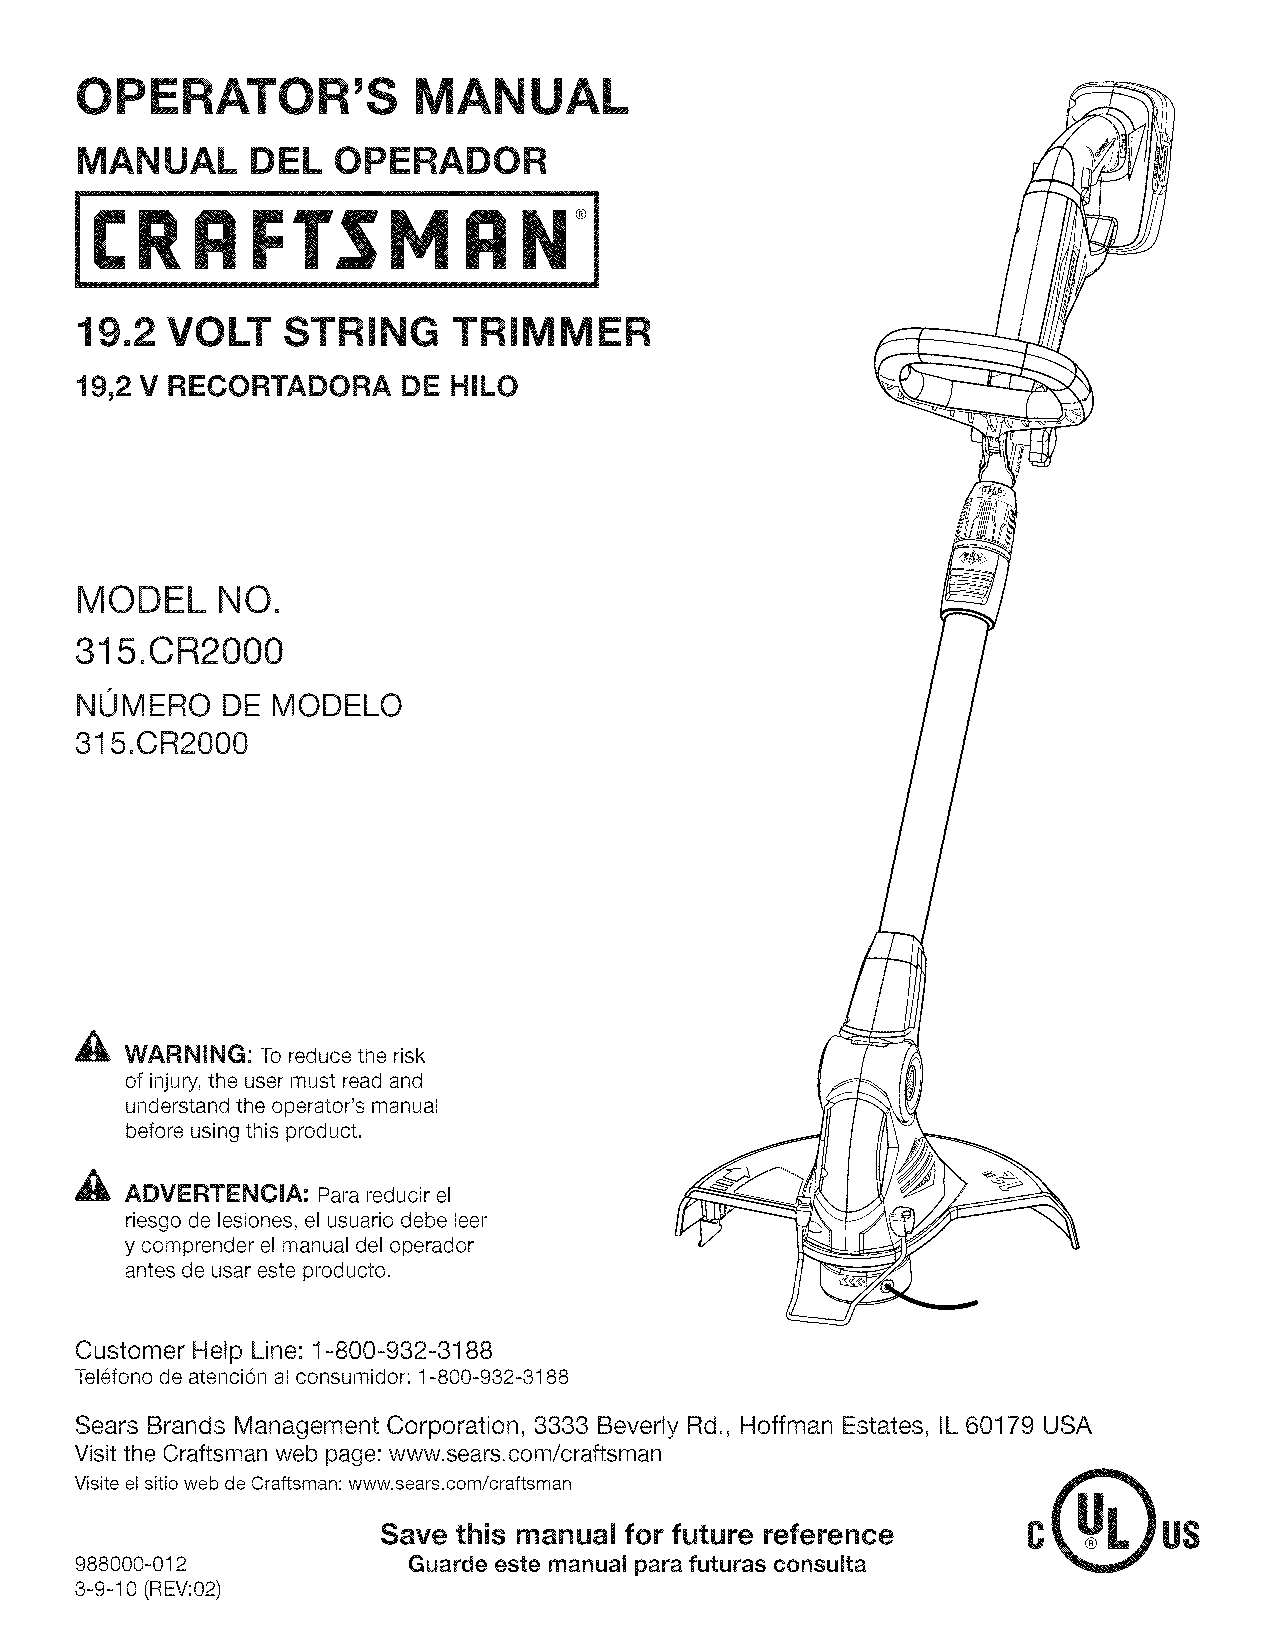 Craftsman 315.CR2000 User Manual